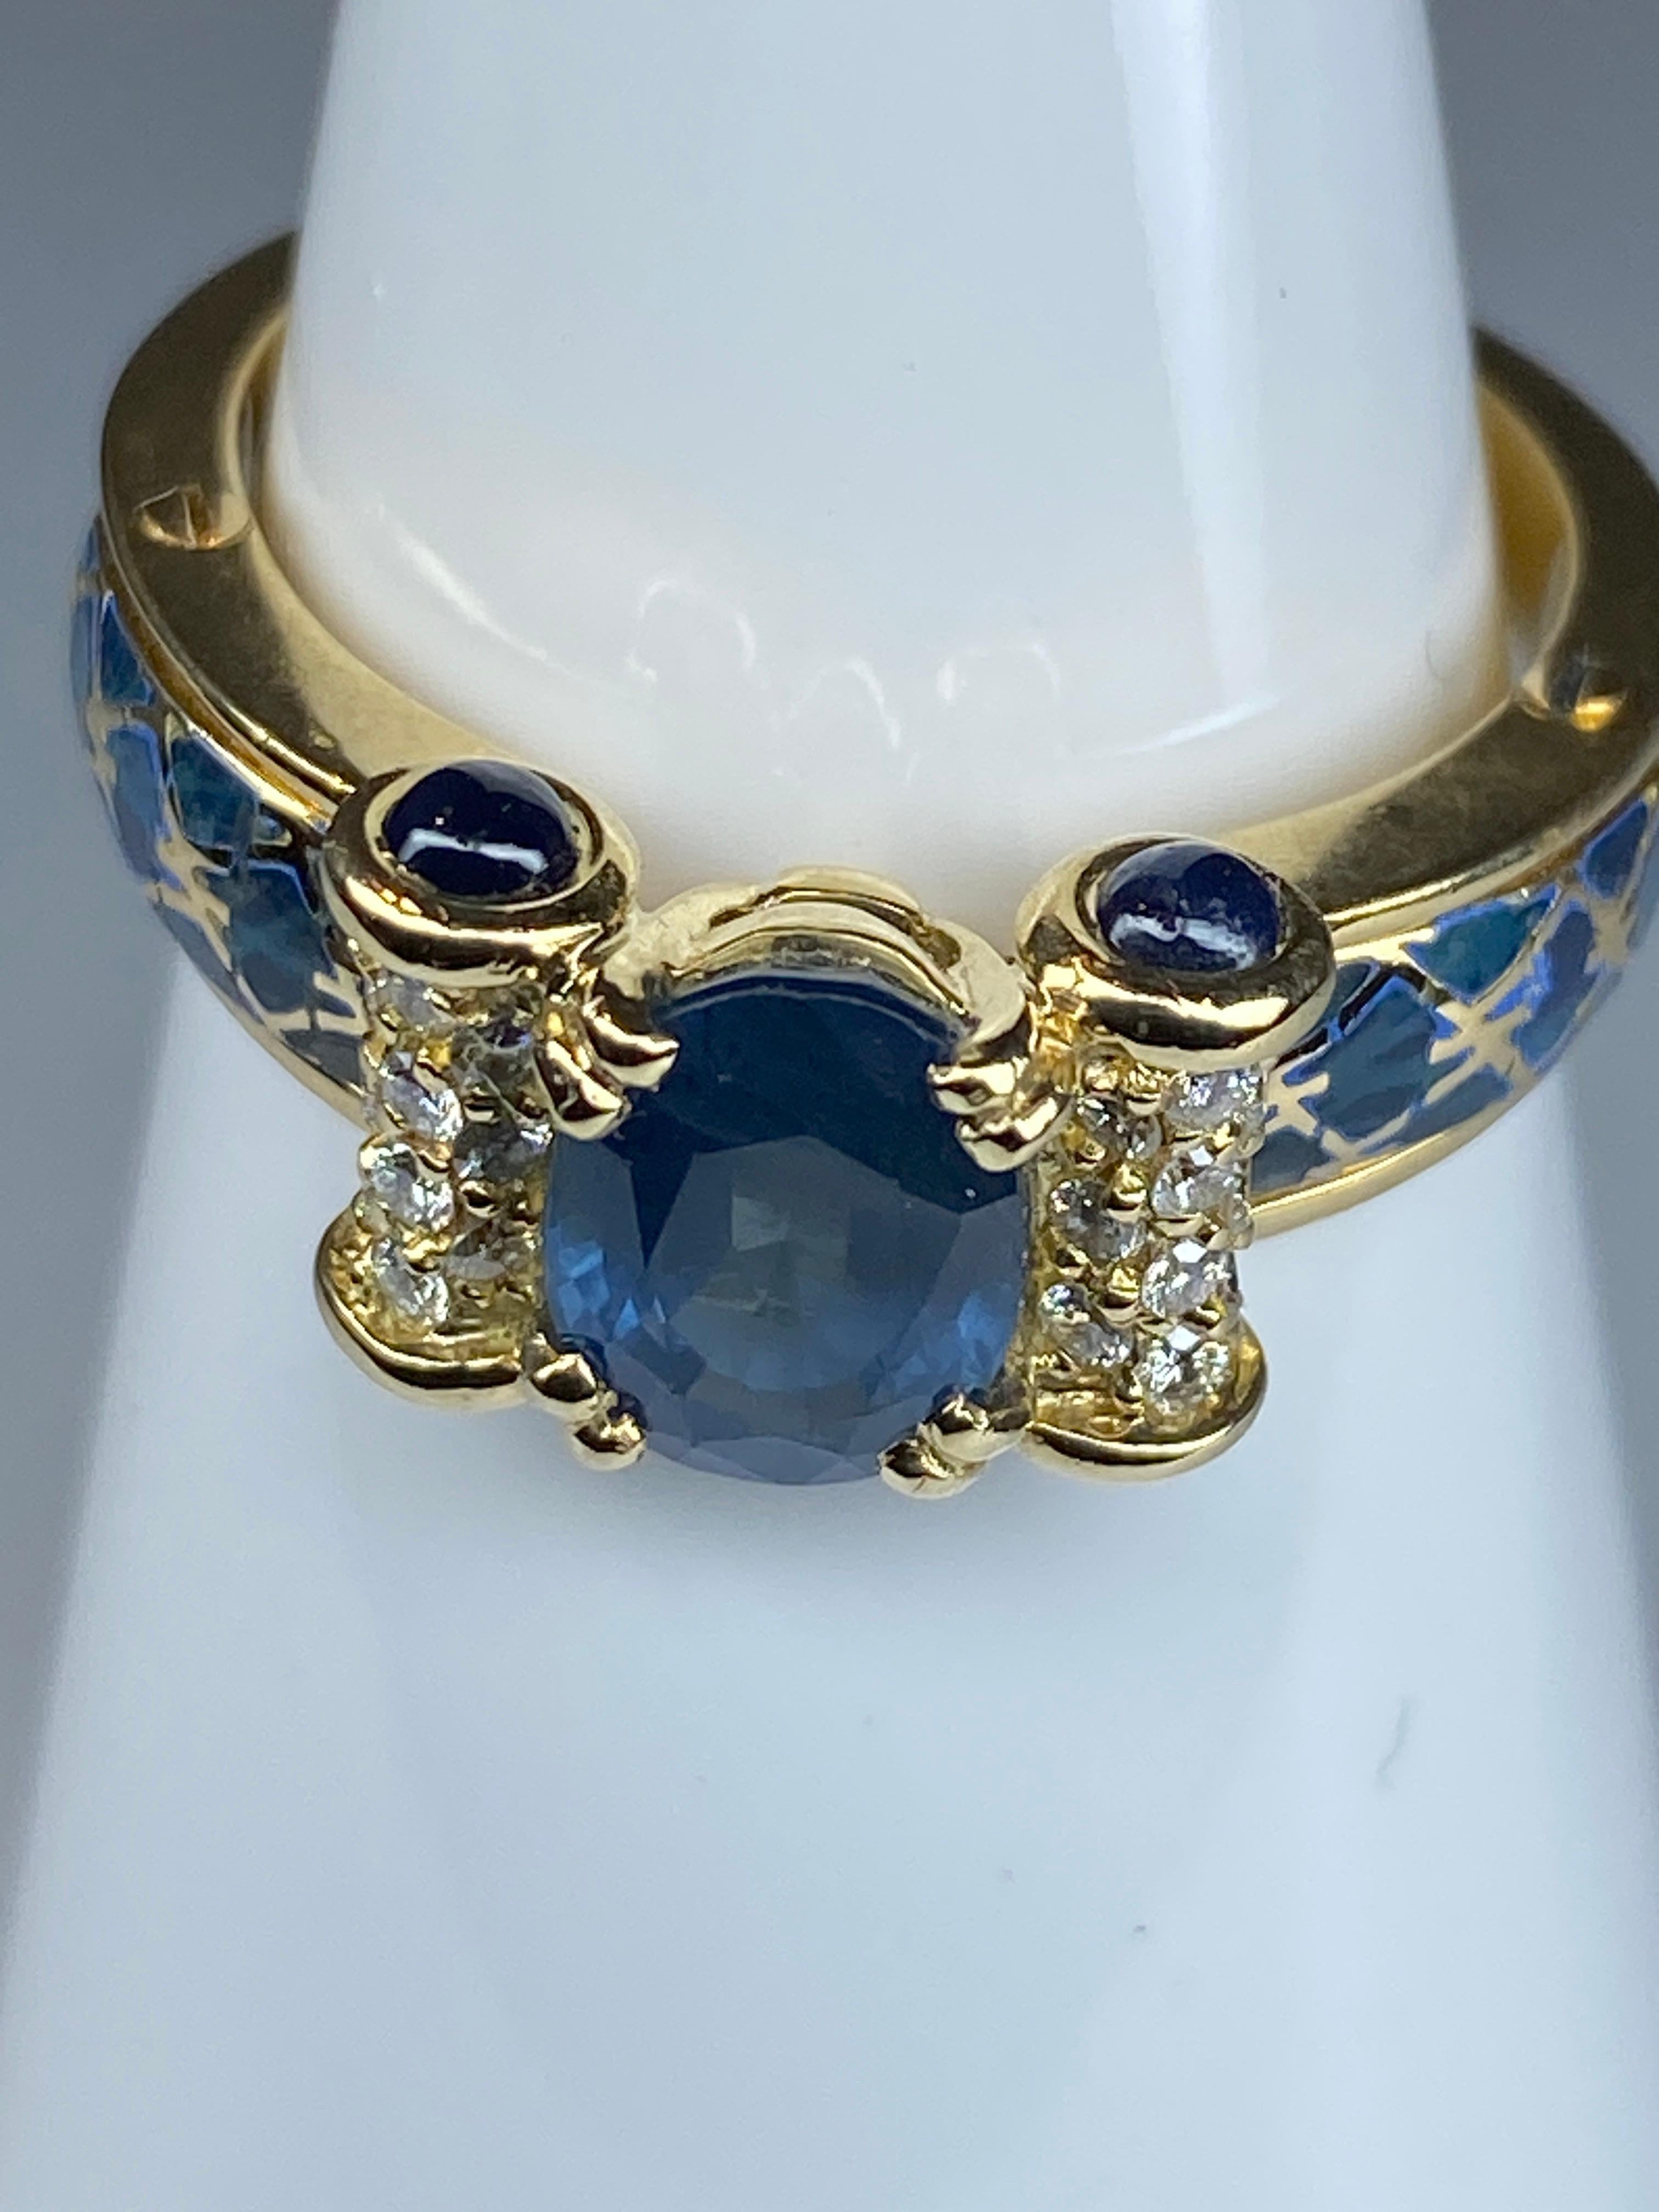 Korloff Ring in 18 Carat Gold: Sapphires, Diamonds, Blue Enamel For Sale 4